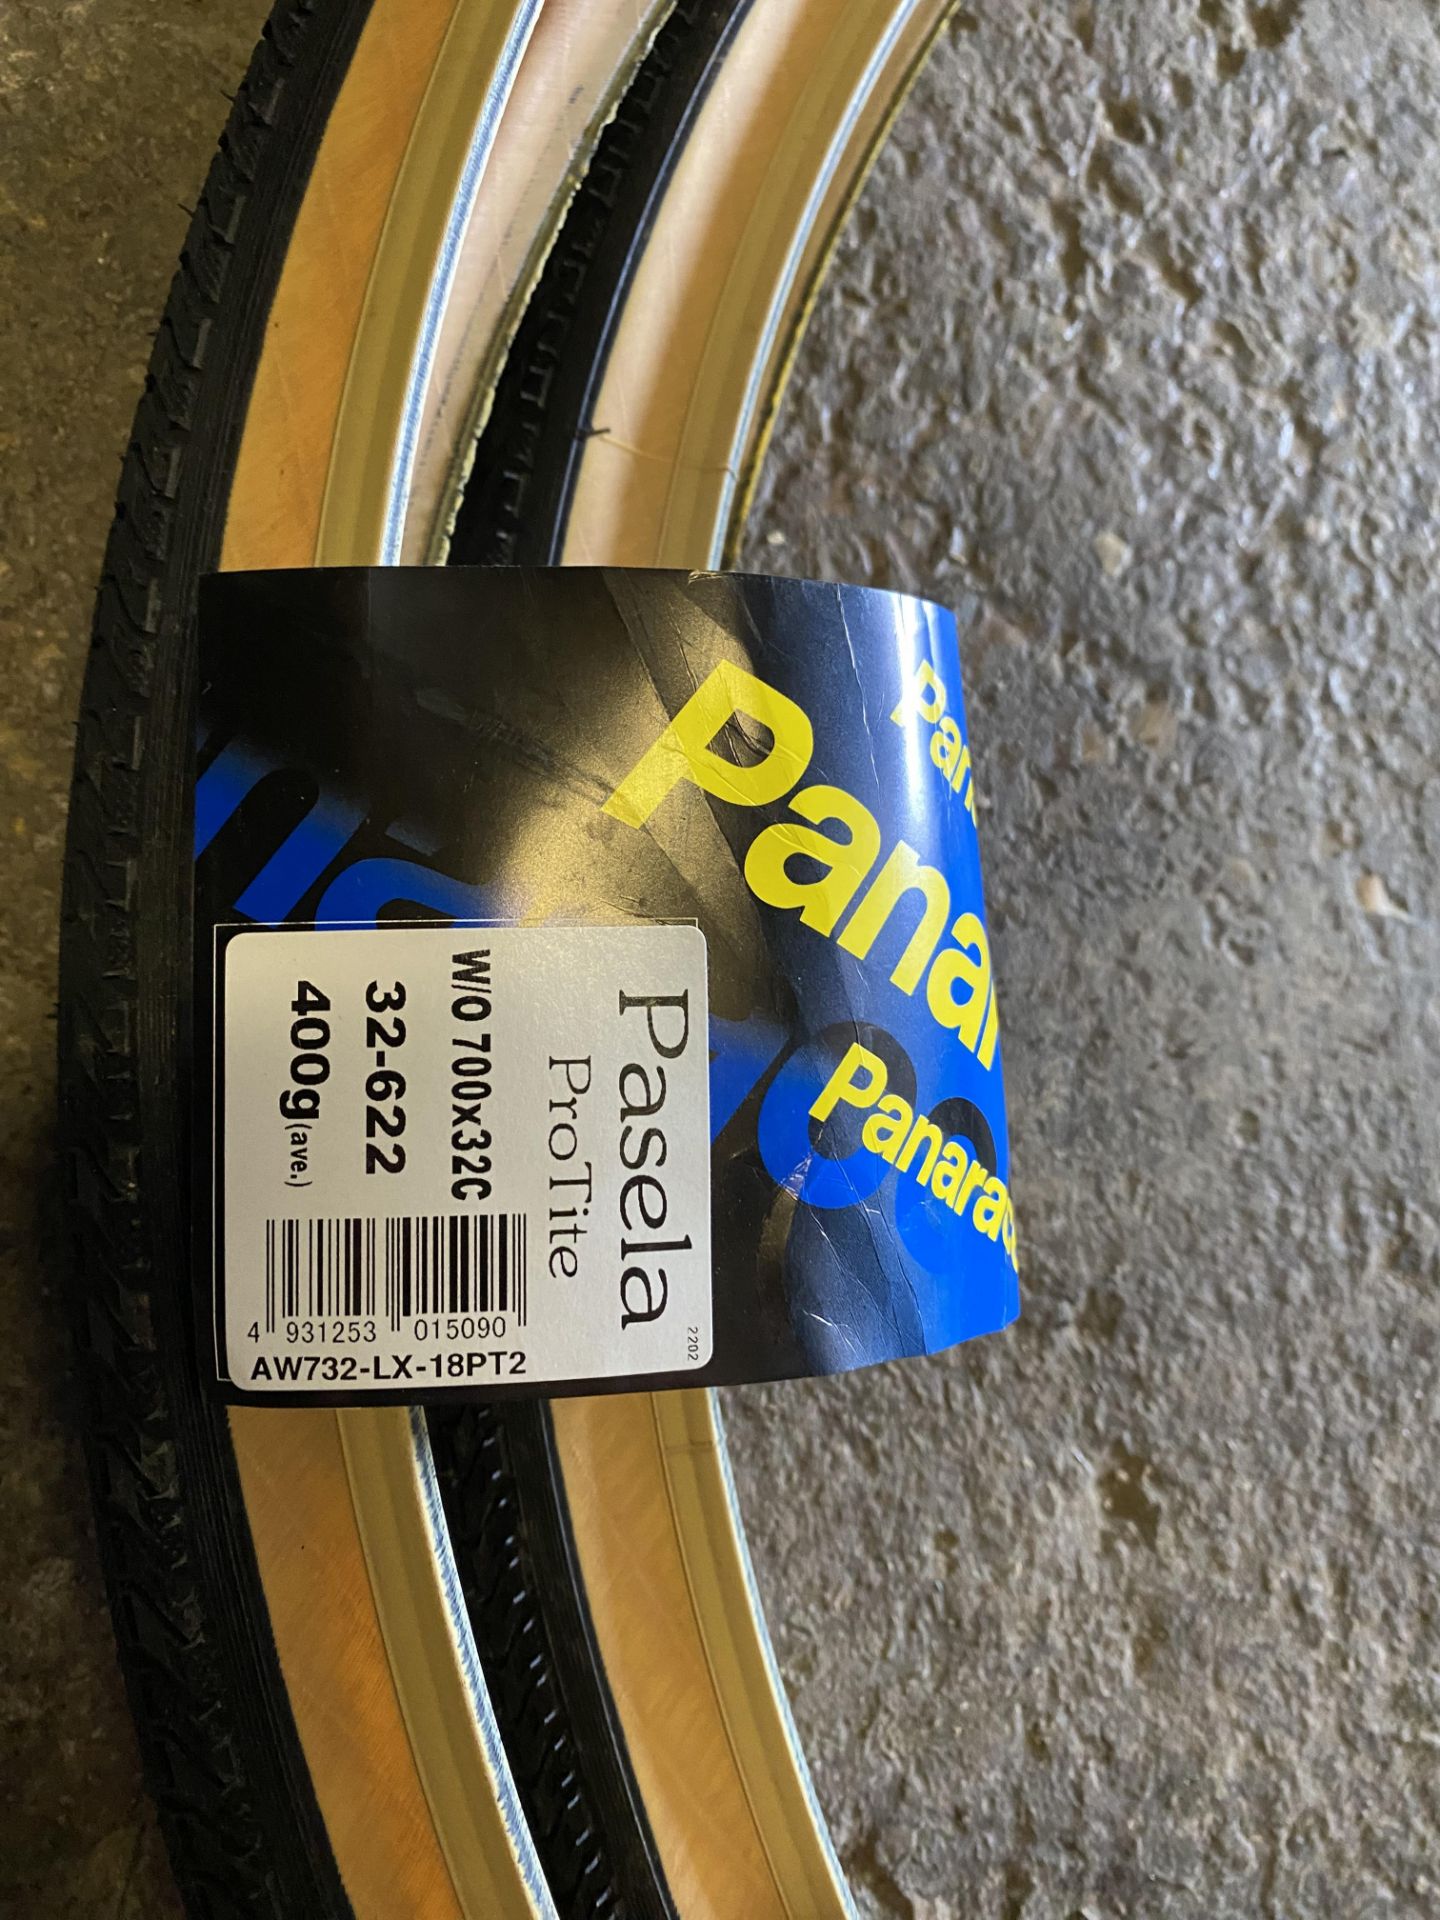 Pair of Panaracer bike tyres, 700 x 32C - Image 2 of 3